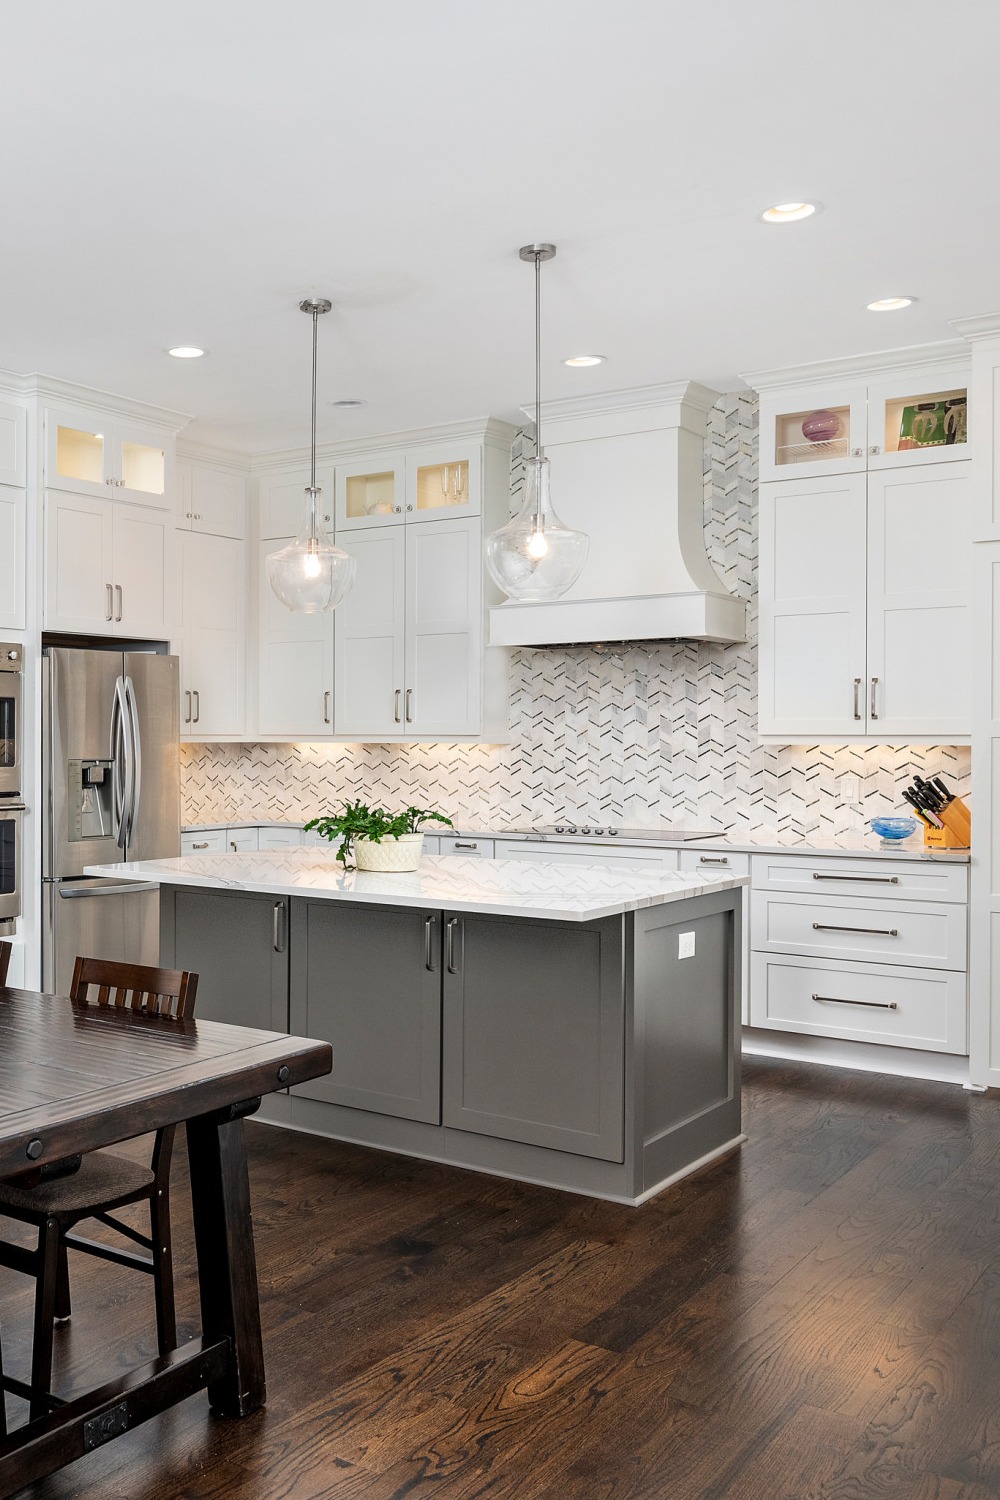 Backsplash Ideas For White Cabinets Mosaic Tile Kitchen Backsplash White Tile